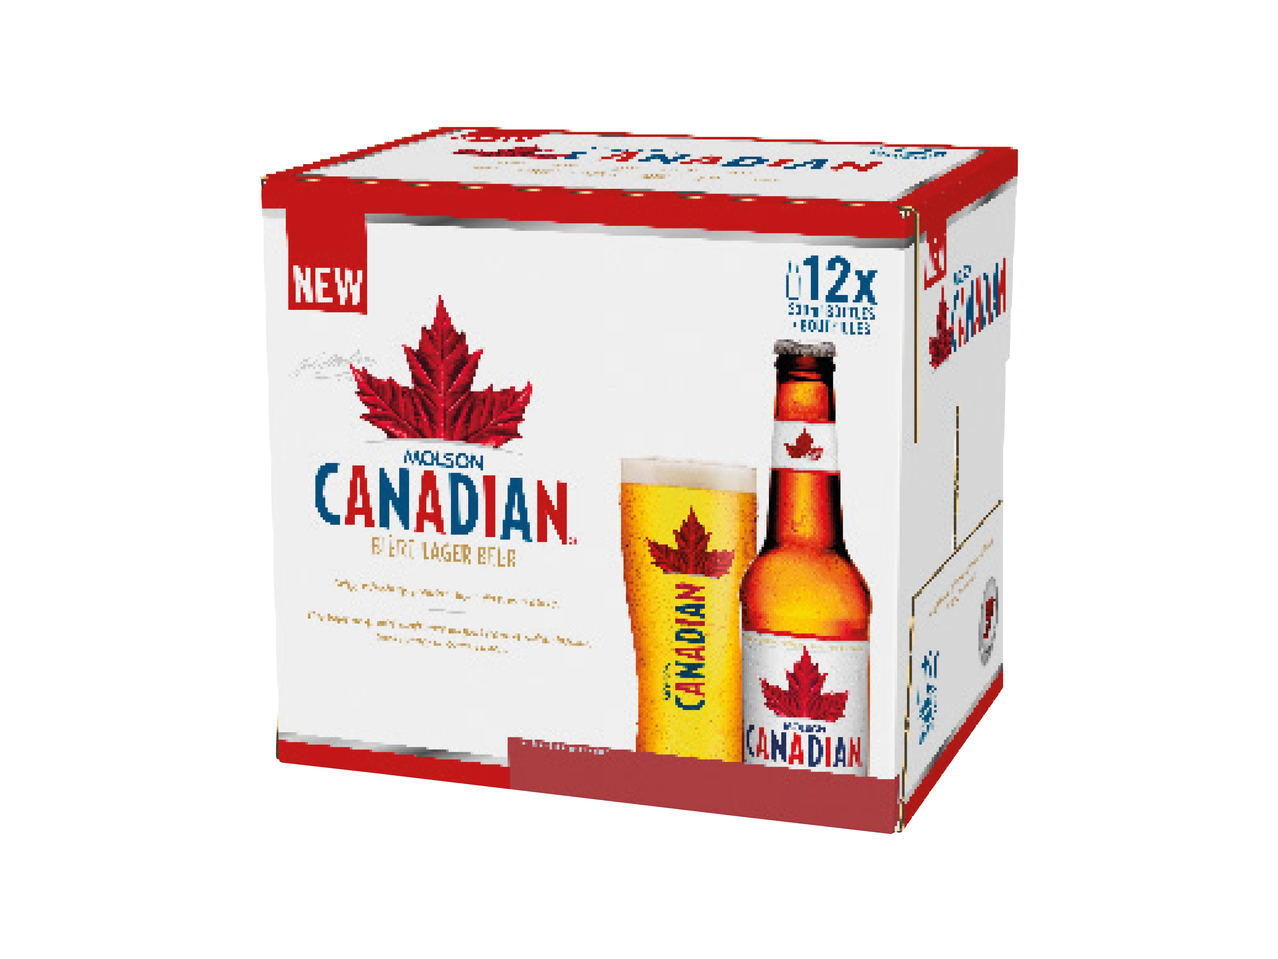 MOLSON(R) Canadian Beer1